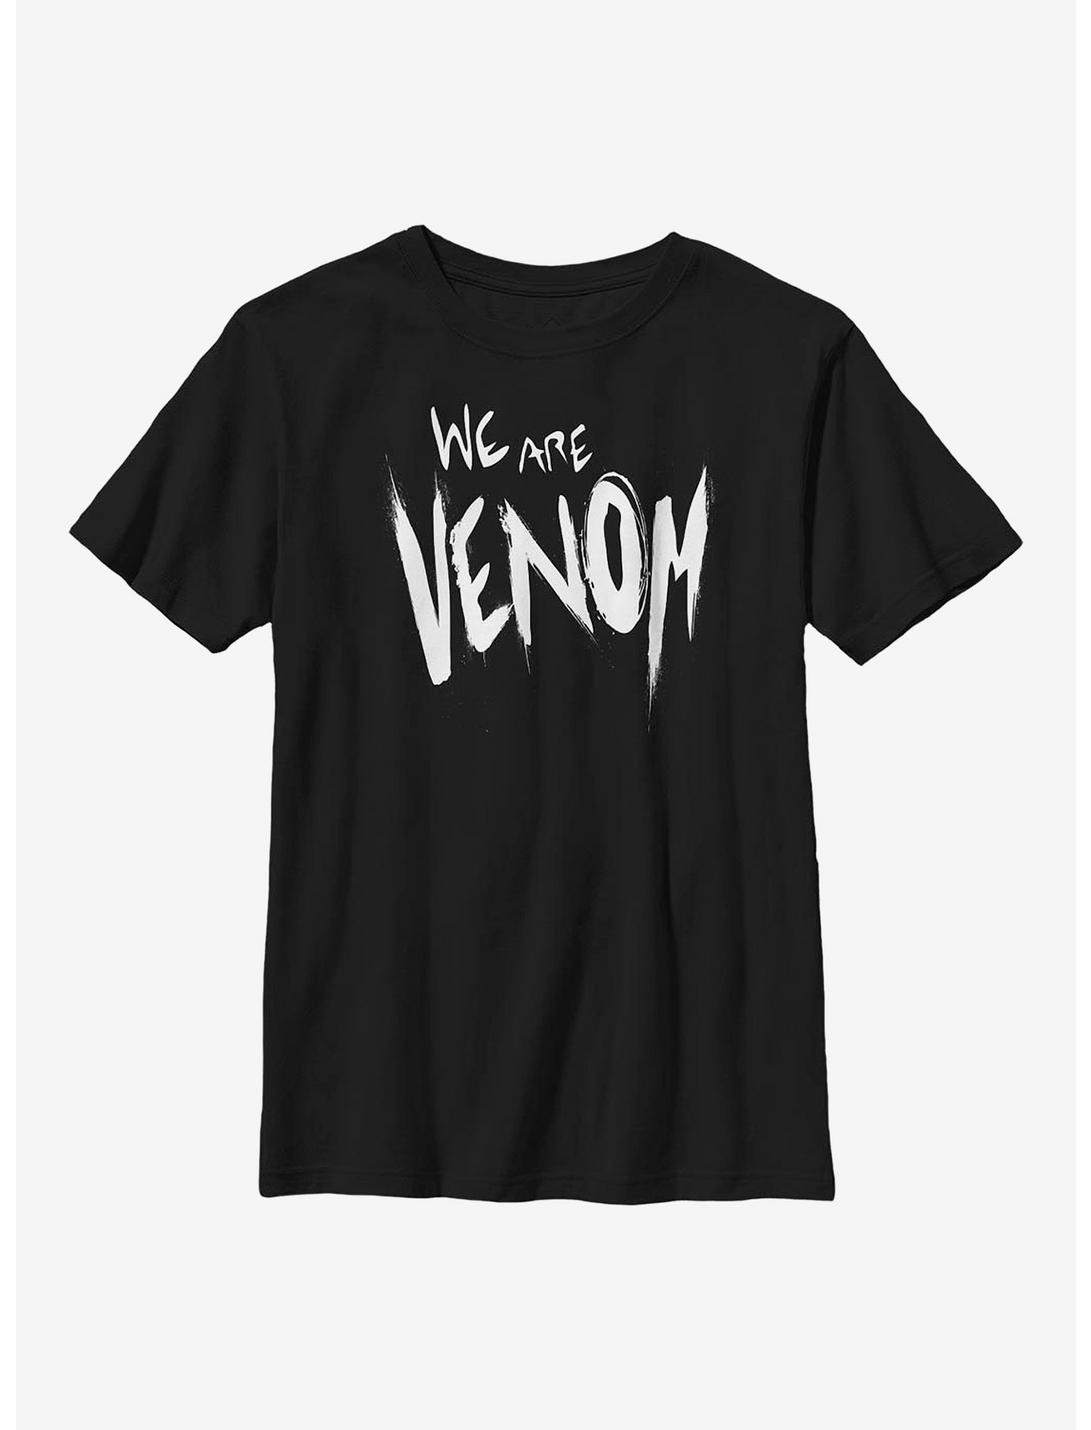 Marvel Venom We Are Venom Slime Youth T-Shirt, BLACK, hi-res